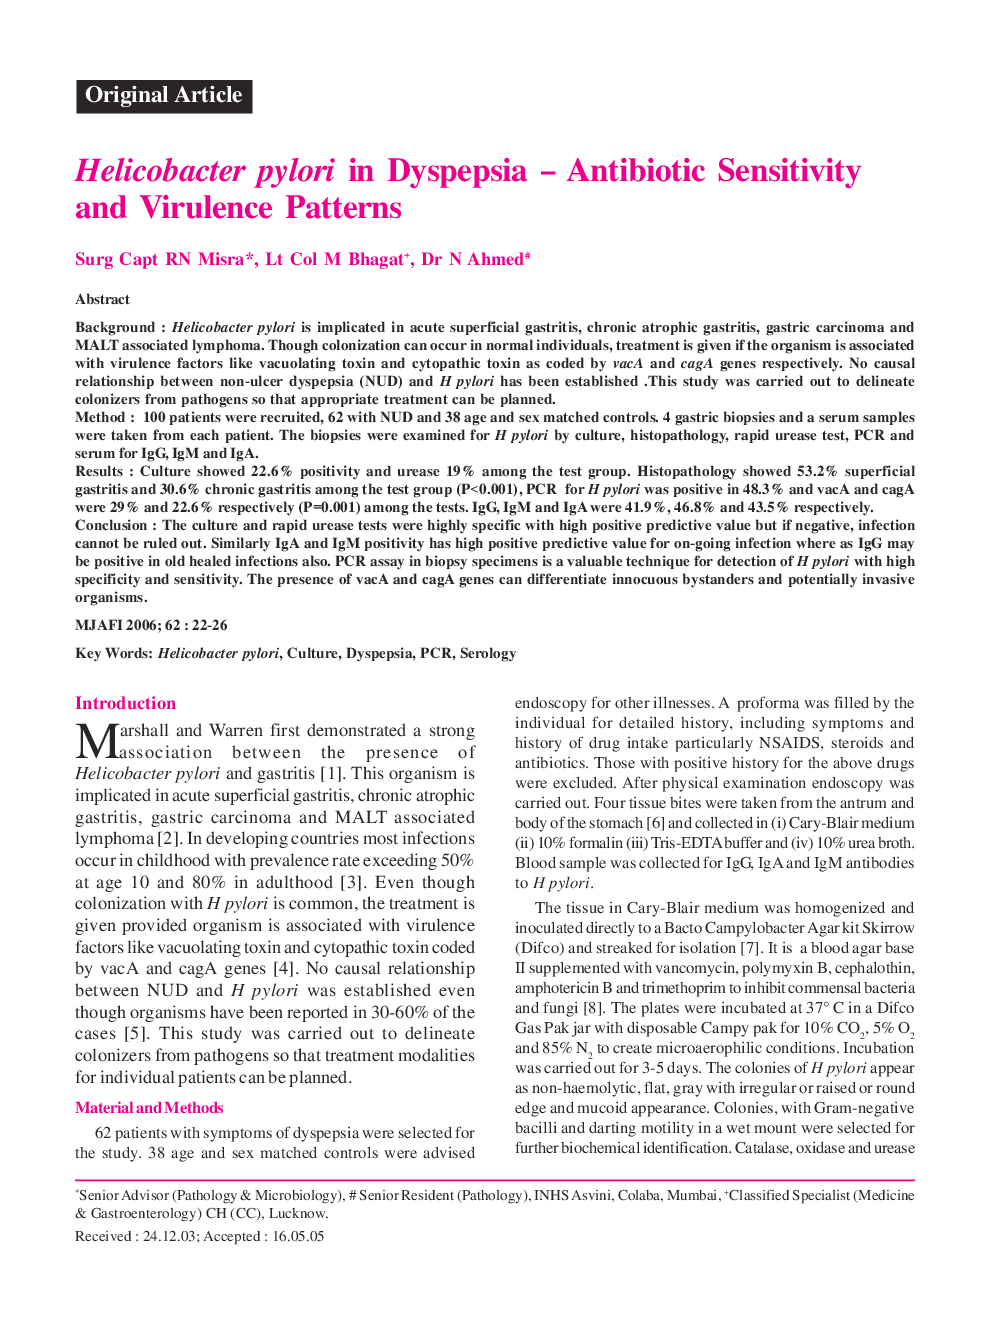 Helicobacter pylori in Dyspepsia – Antibiotic Sensitivity and Virulence Patterns